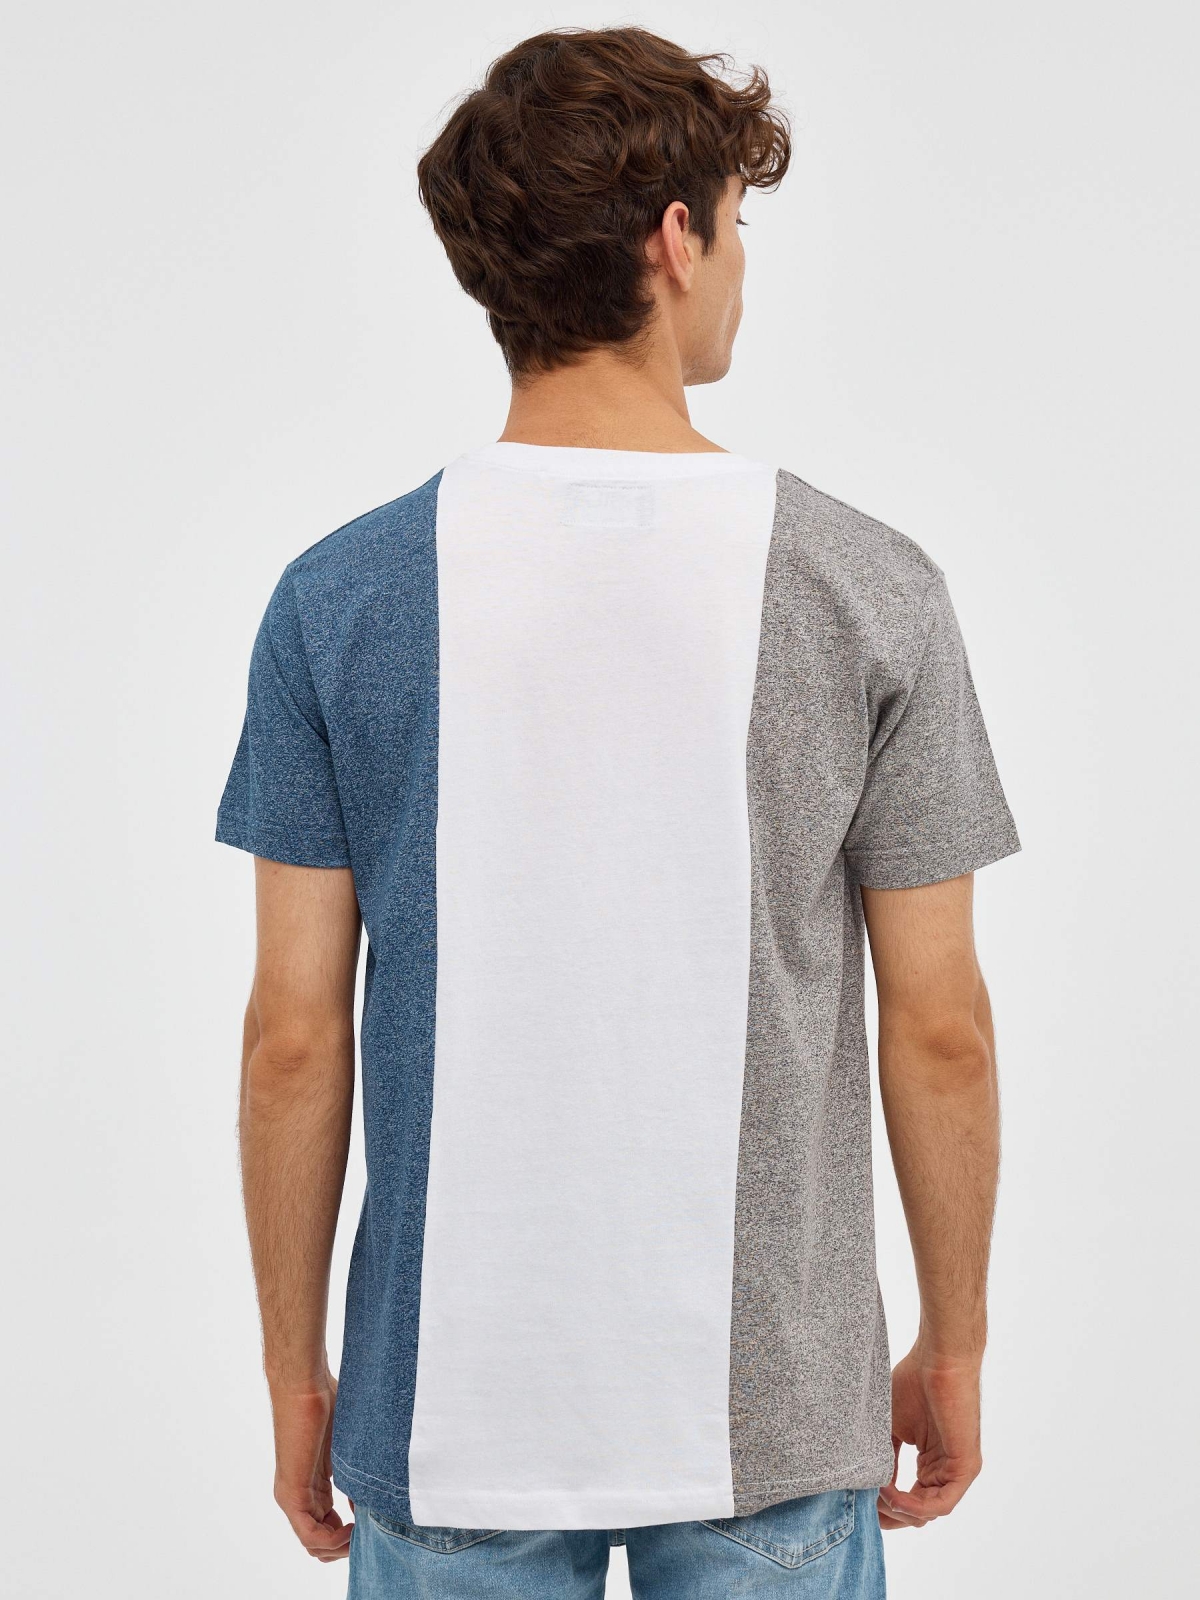 Striped color block t-shirt multicolor middle back view